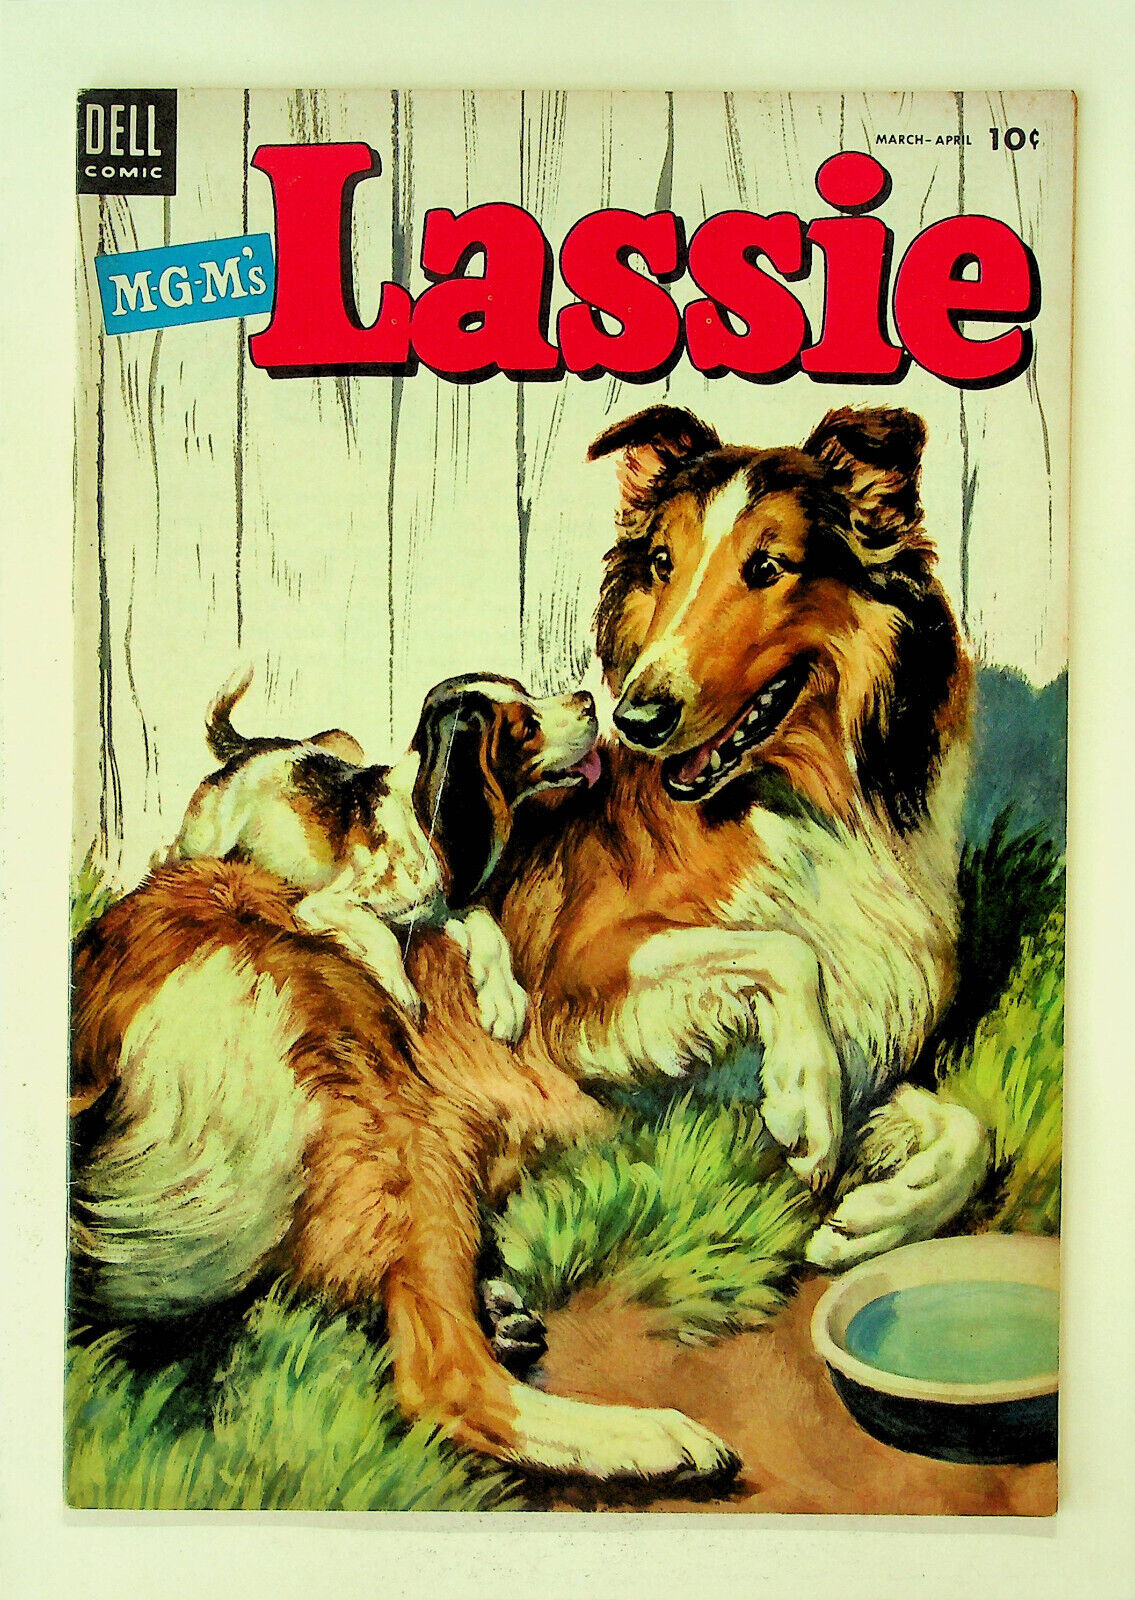 MGM\'s Lassie #15 (Mar-Apr 1954, Dell) - Good